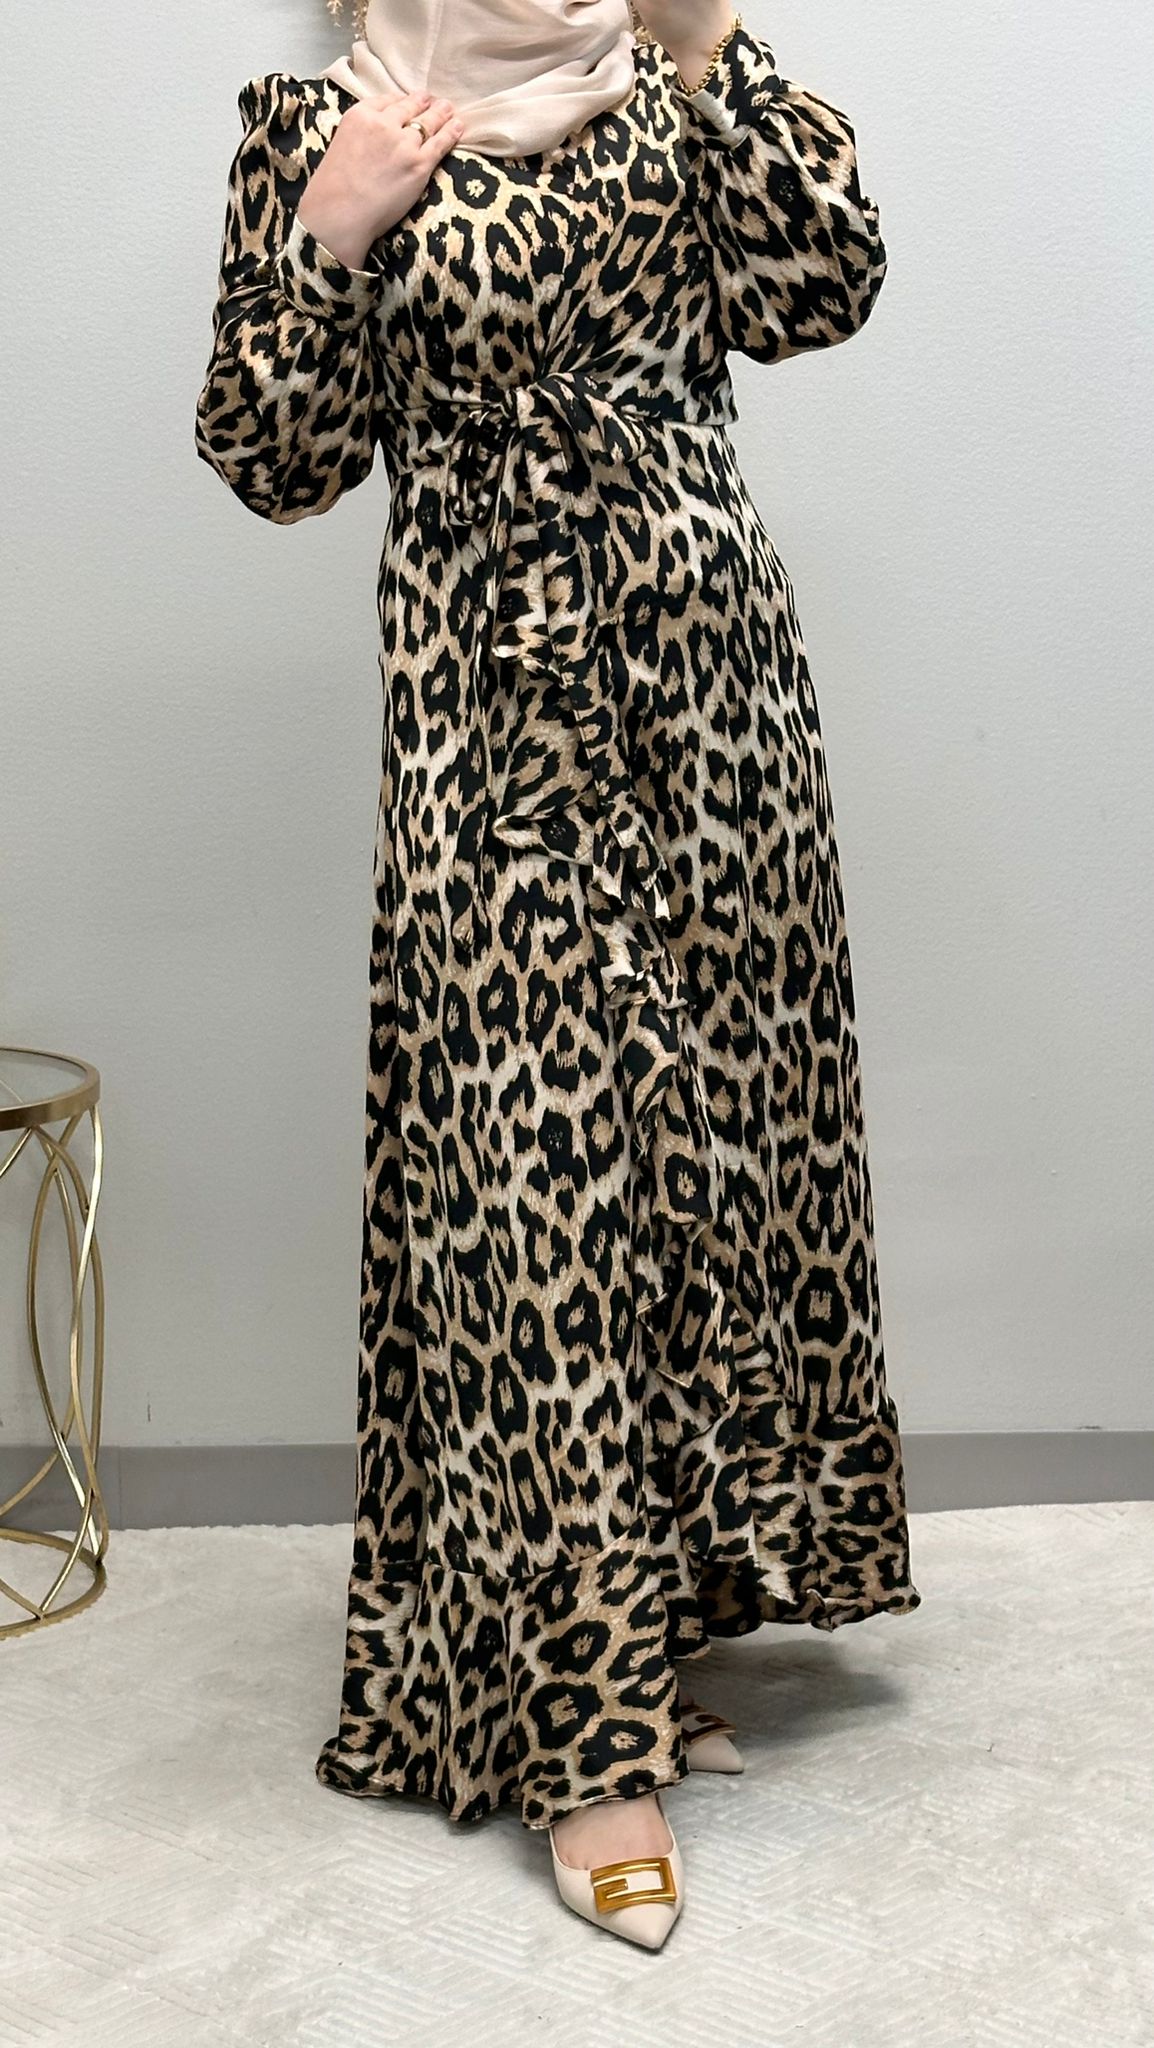 Fierce Sophistication: Ruffled Tiger Dress